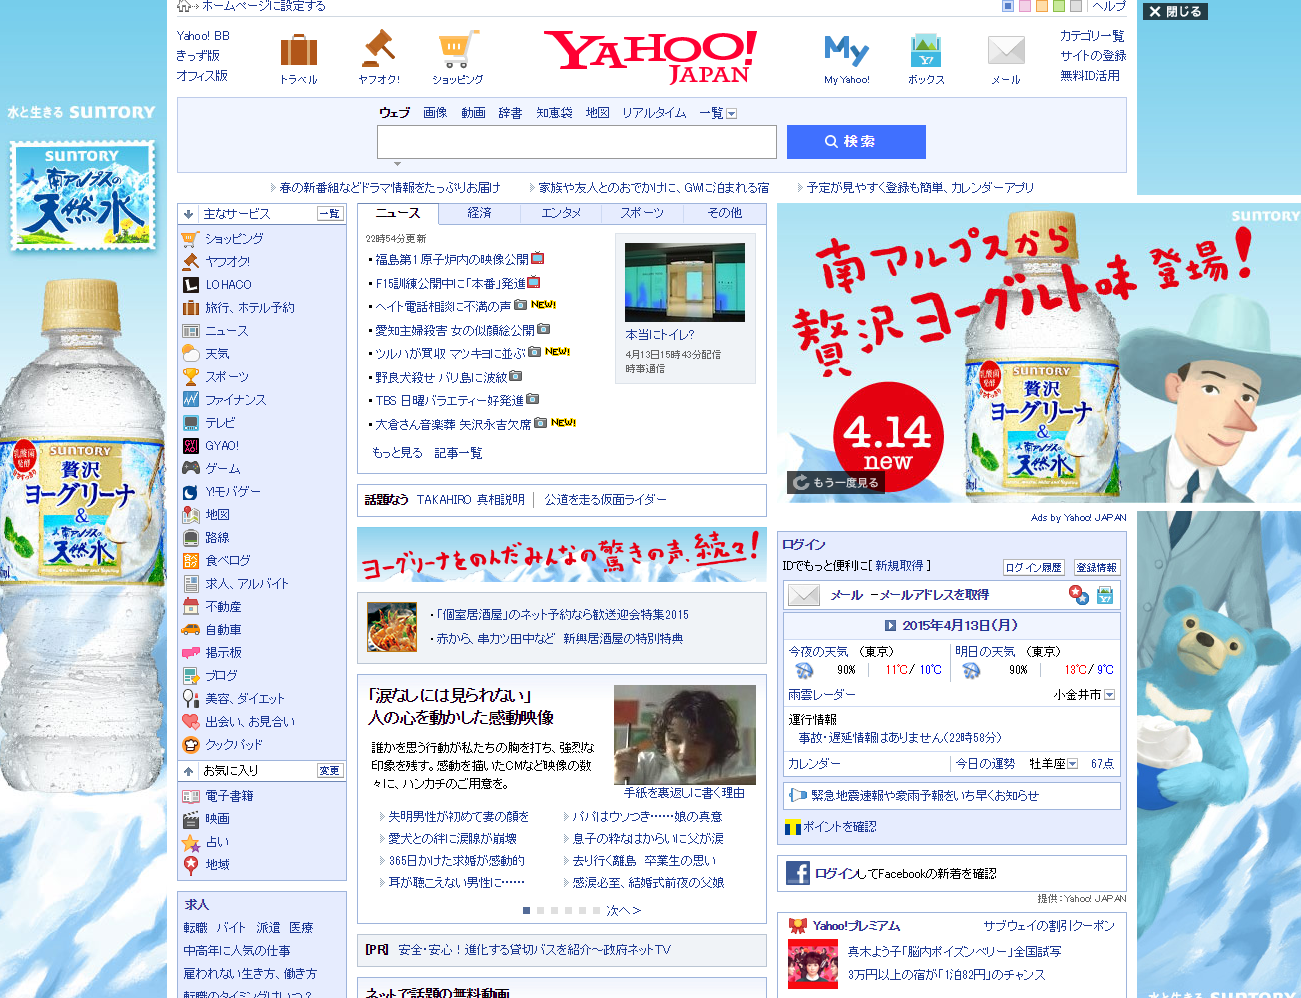 Yahoo!JAPANトップインパクト